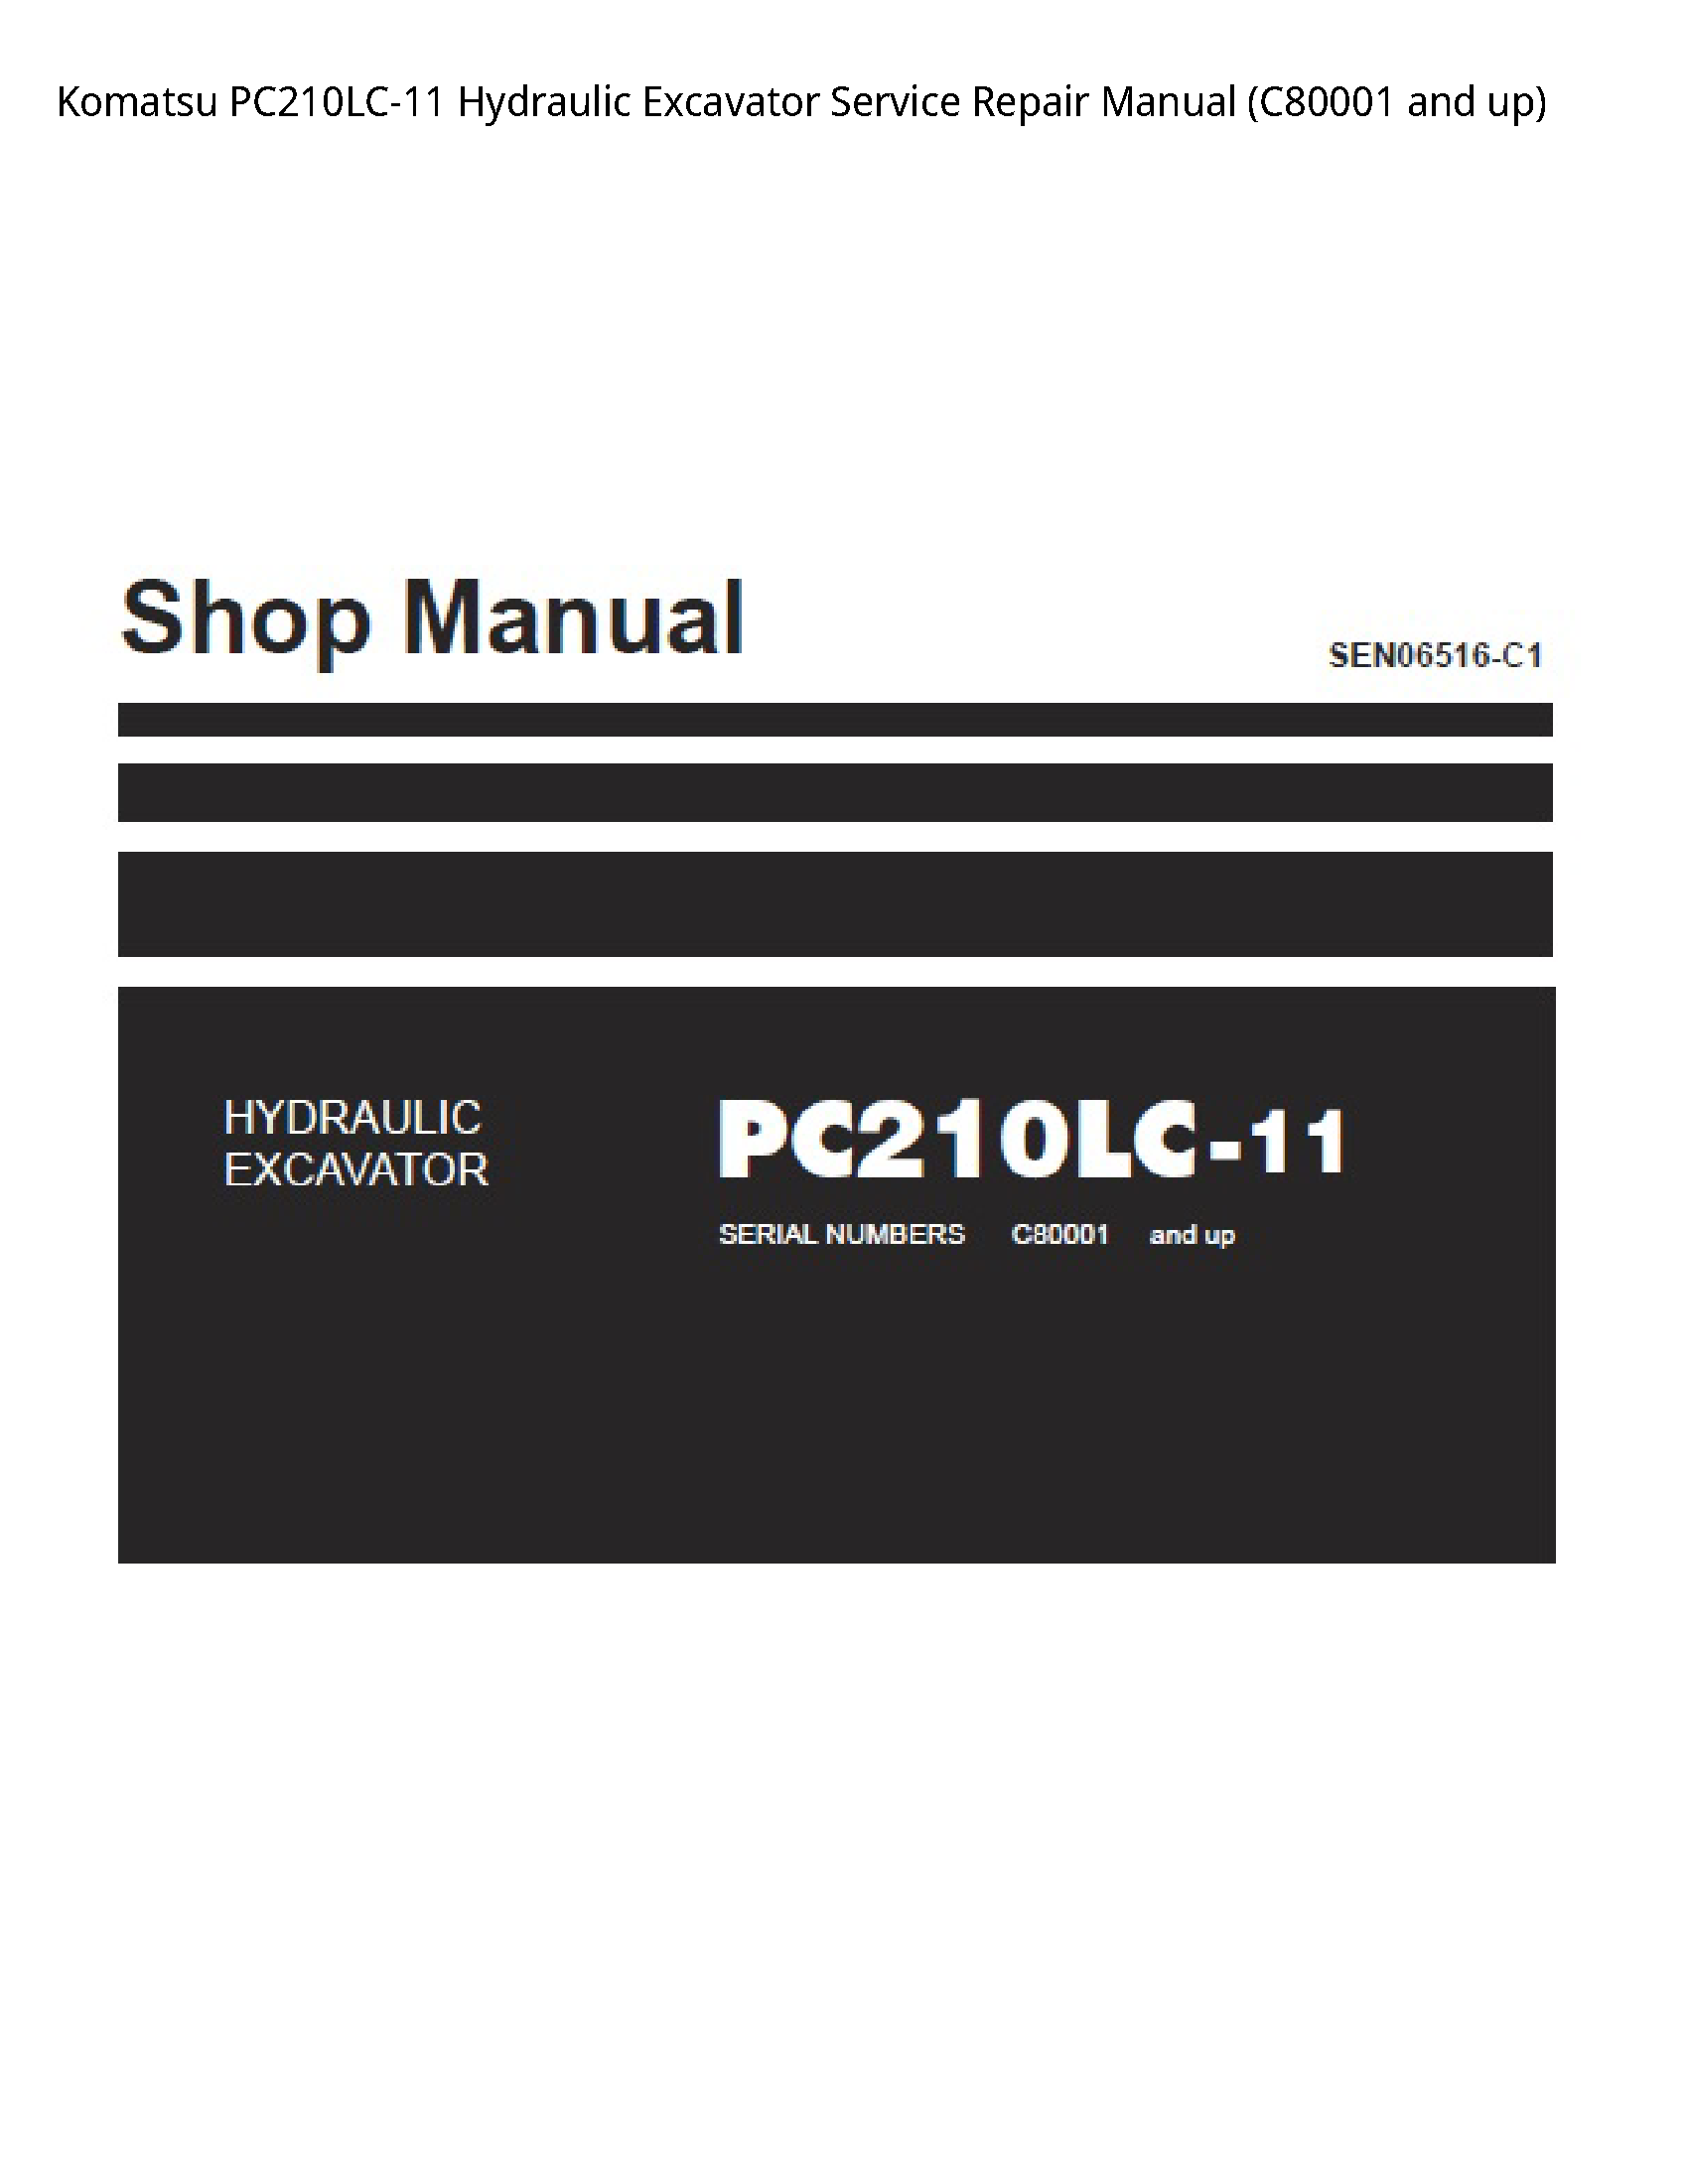 KOMATSU PC210LC-11 Hydraulic Excavator manual